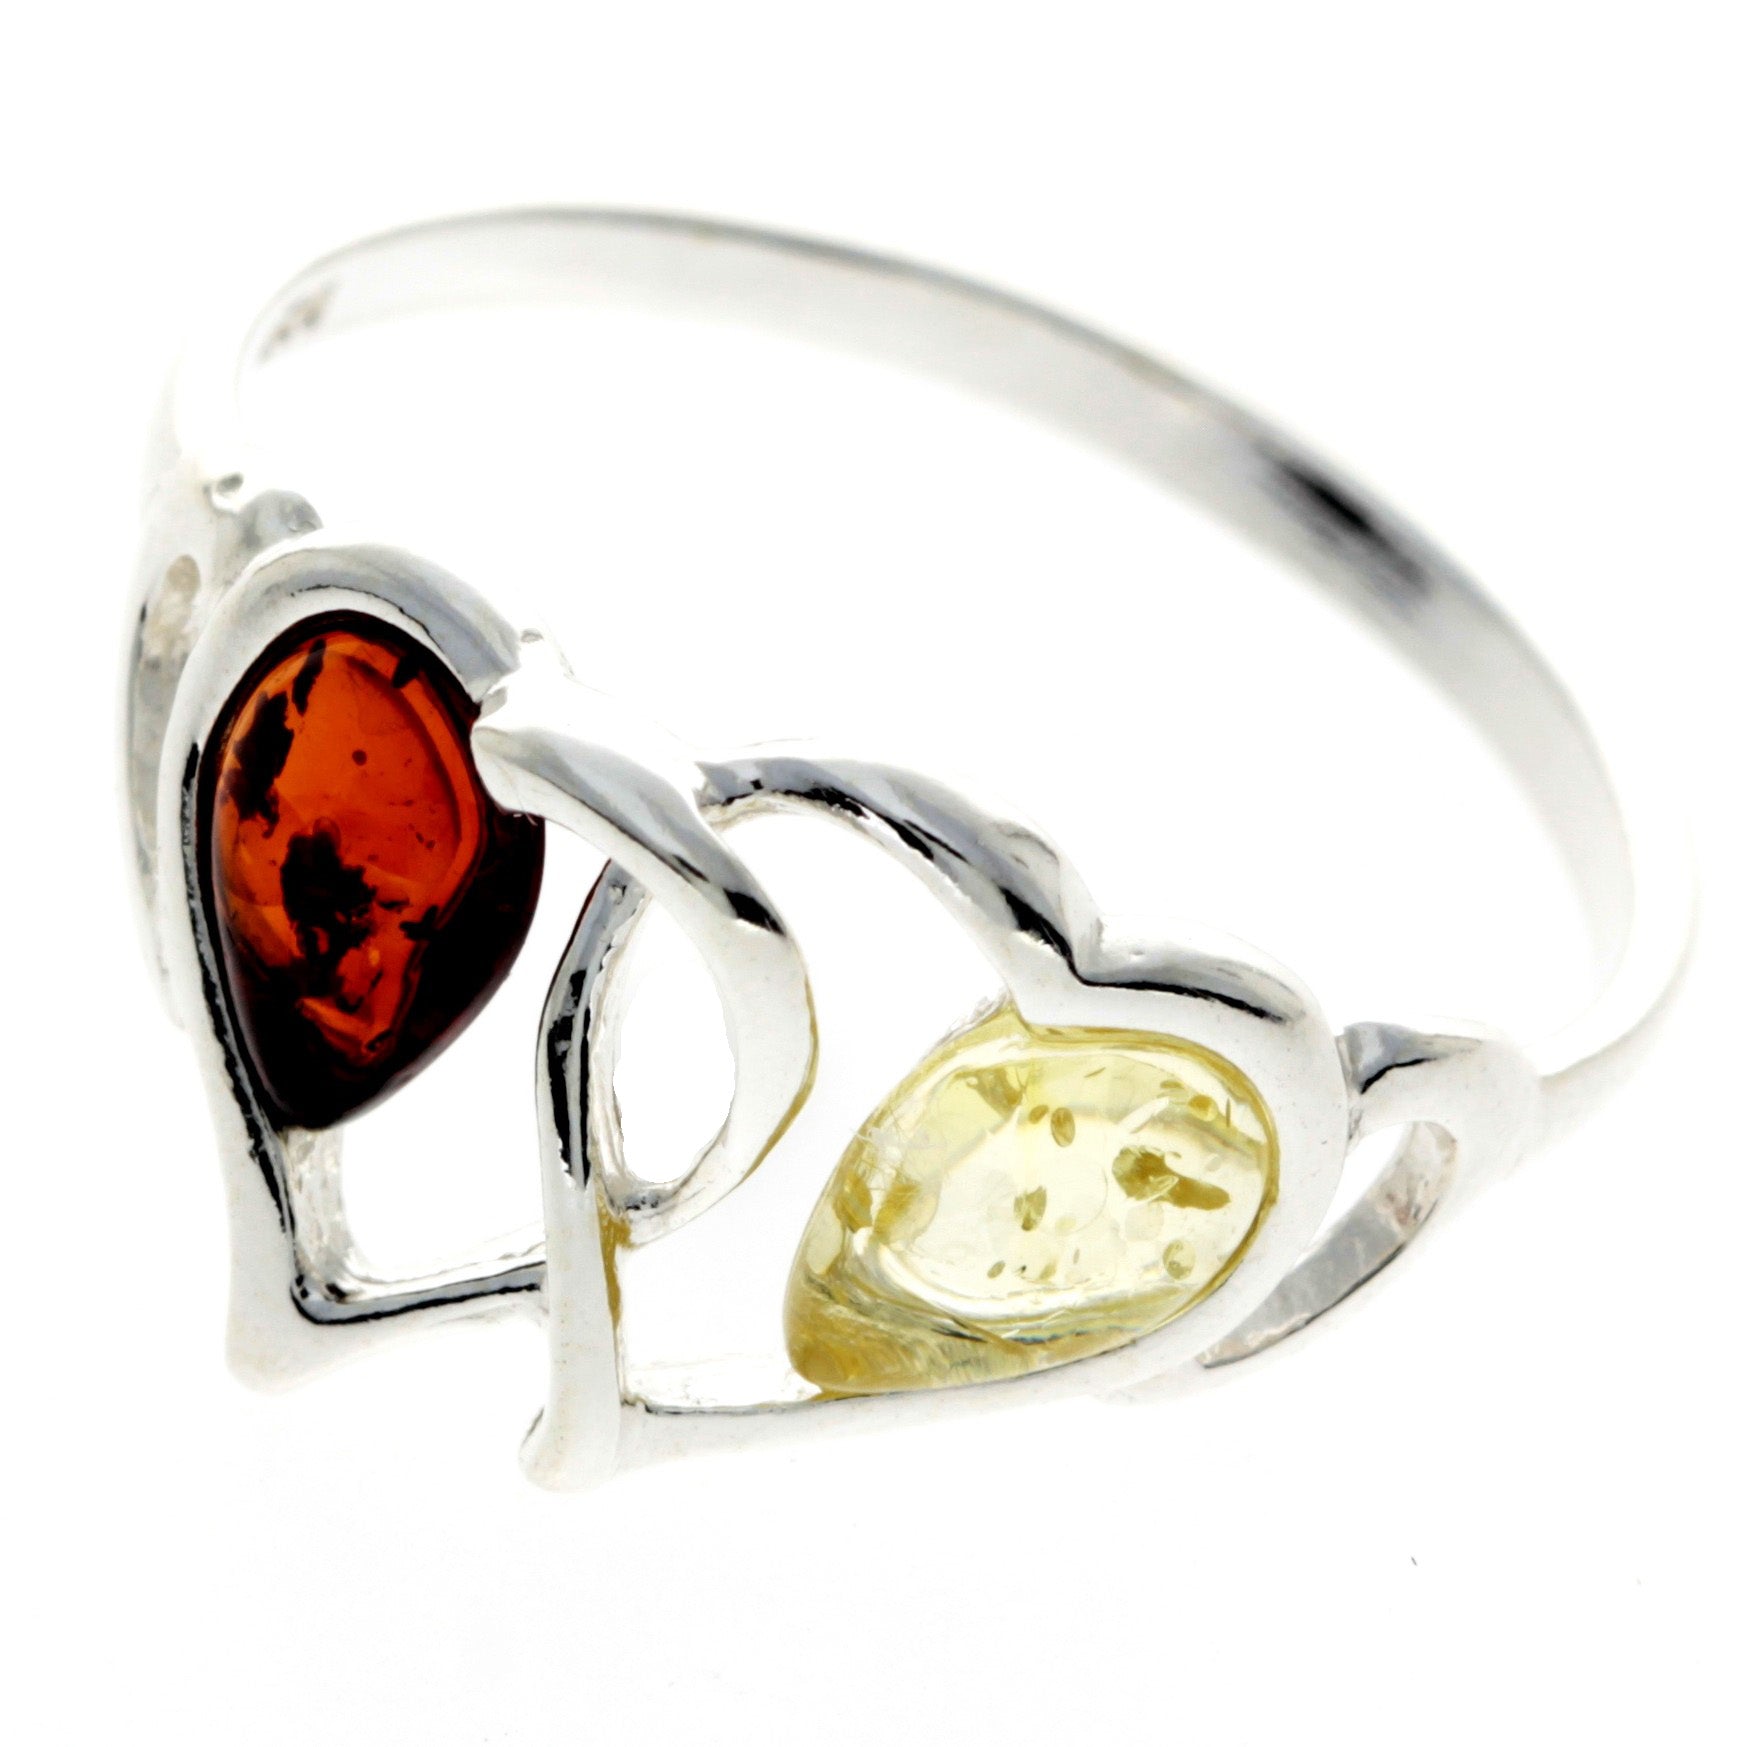 925 Sterling Silver & Baltic Amber Modern Designer Ring - GL713